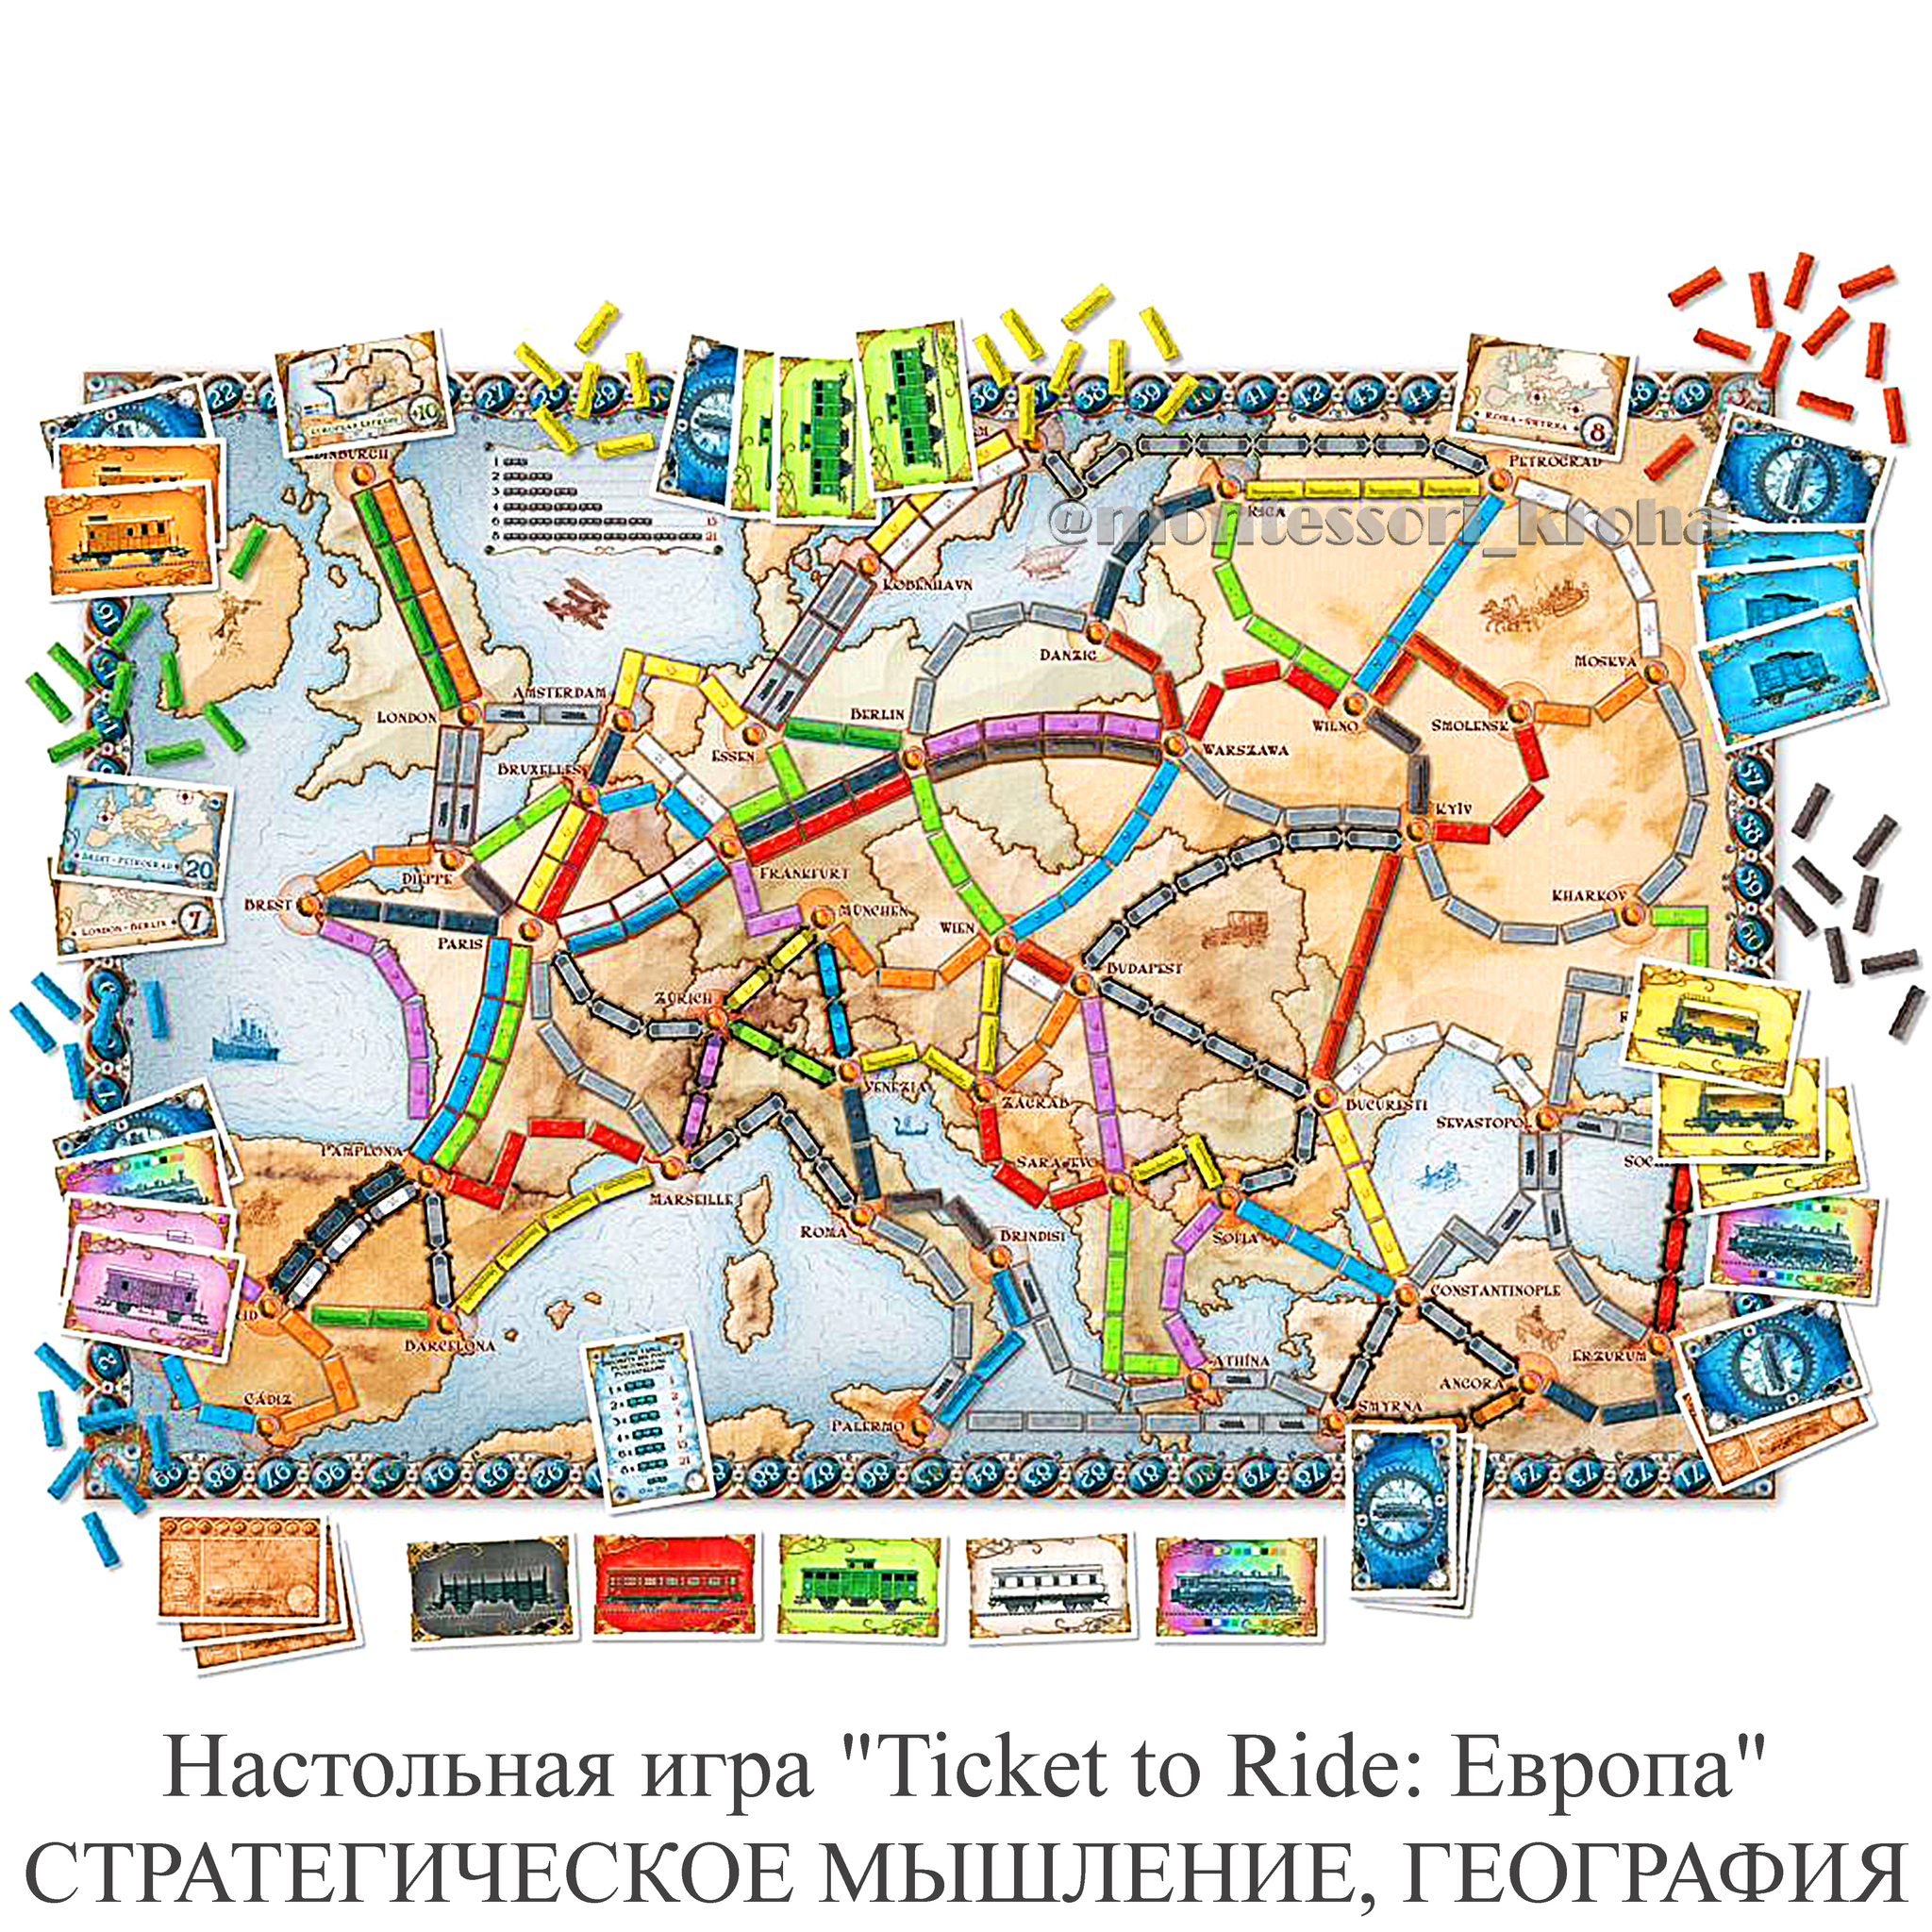 Игра поезд европа. Ticket to Ride Европа настольная игра. Карта для игры ticket to Ride Europa. Ticket to Ride: Европа 1912 настольная игра. Ticket to Ride поезда.